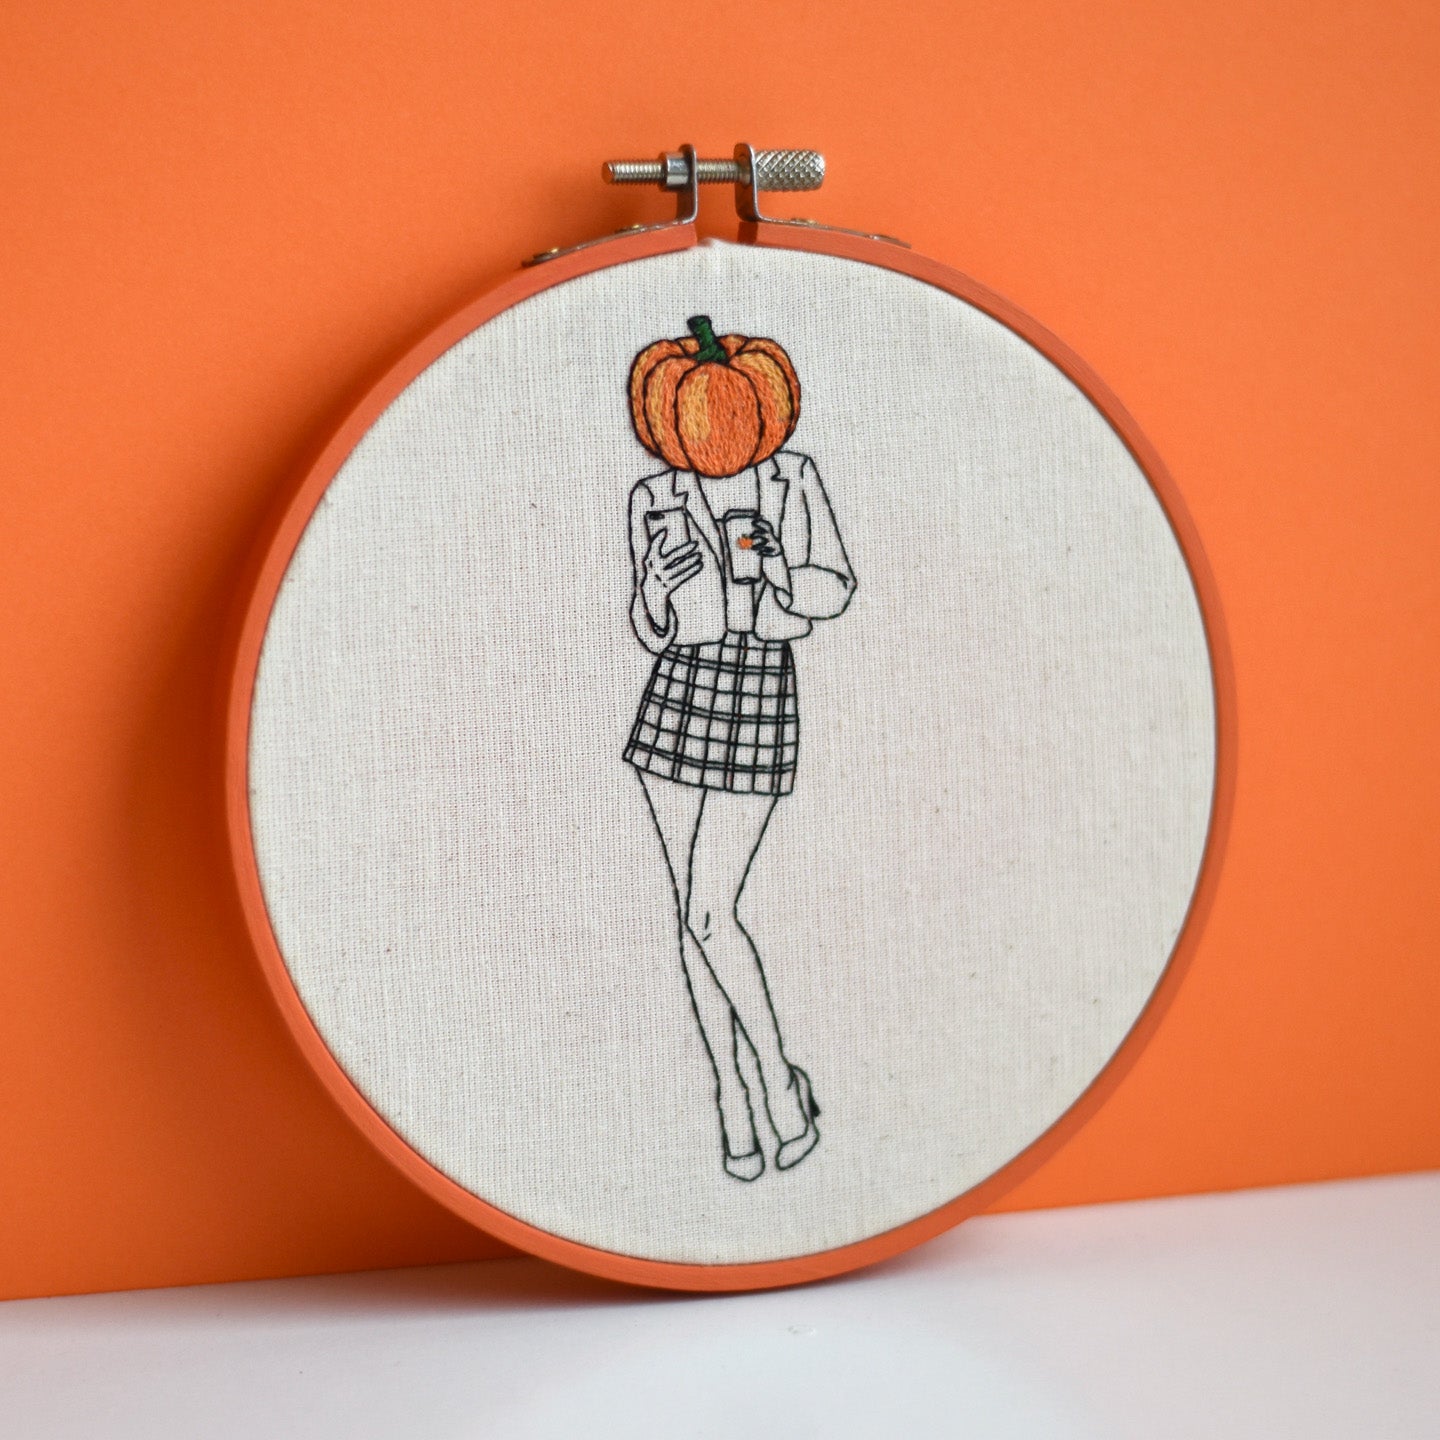 Pumpkin Spice Digital Embroidery Pattern